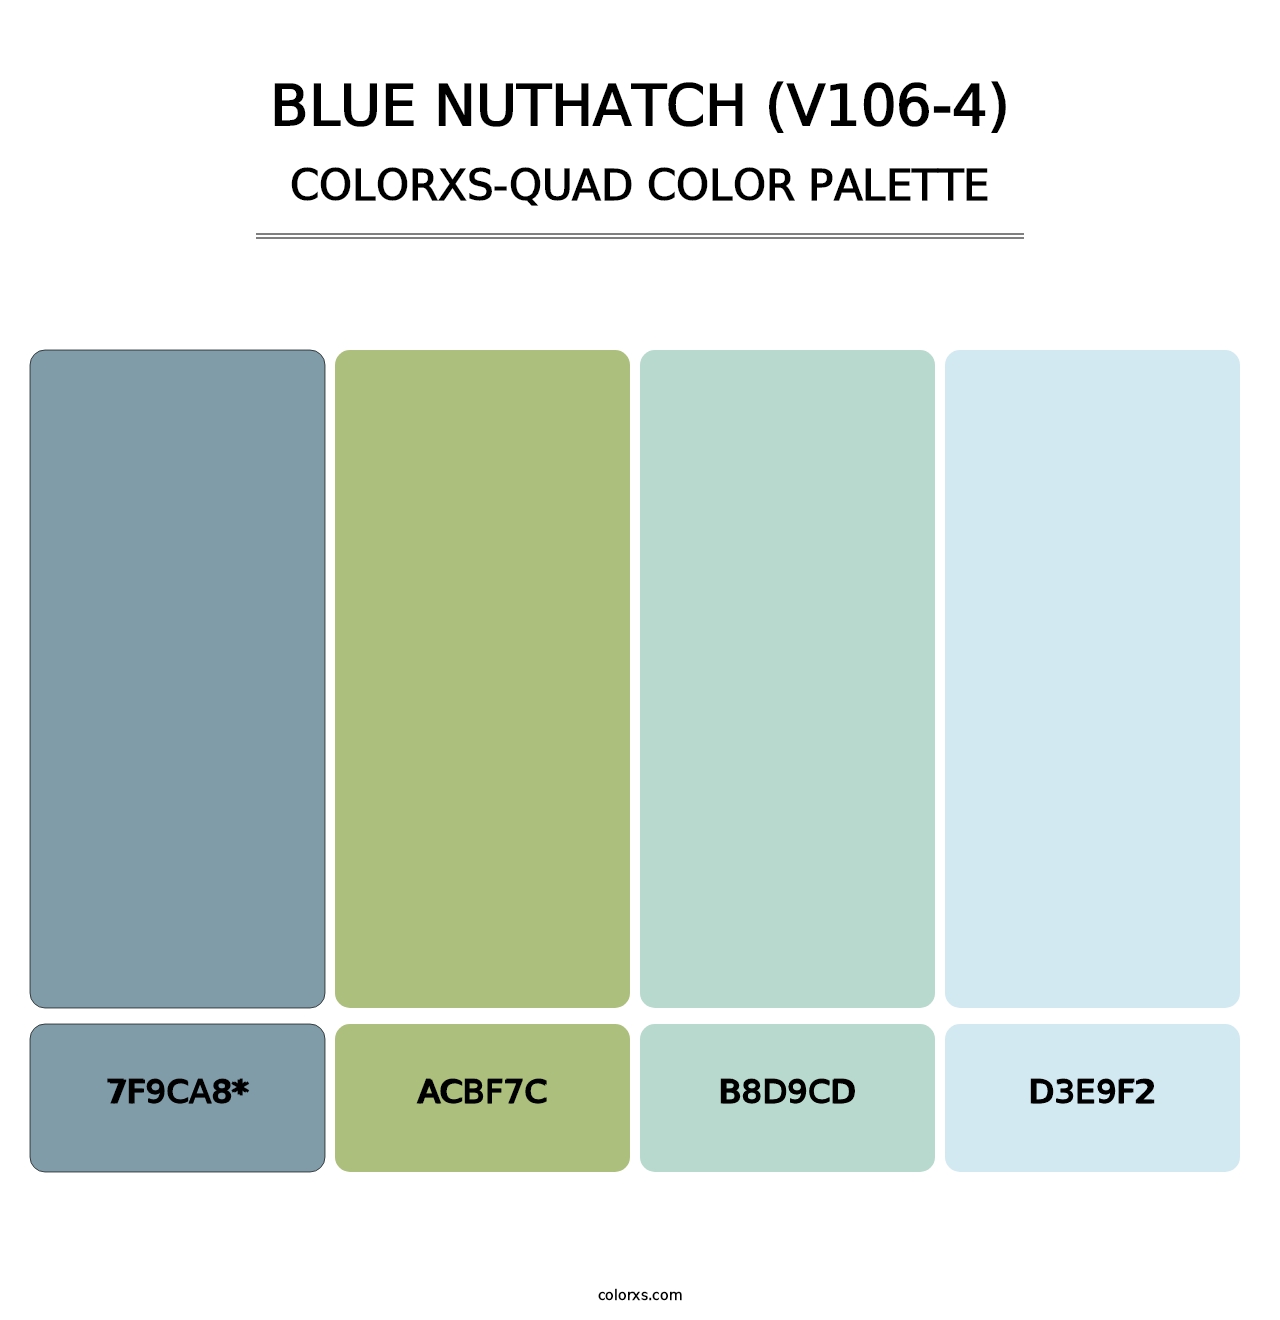 Blue Nuthatch (V106-4) - Colorxs Quad Palette